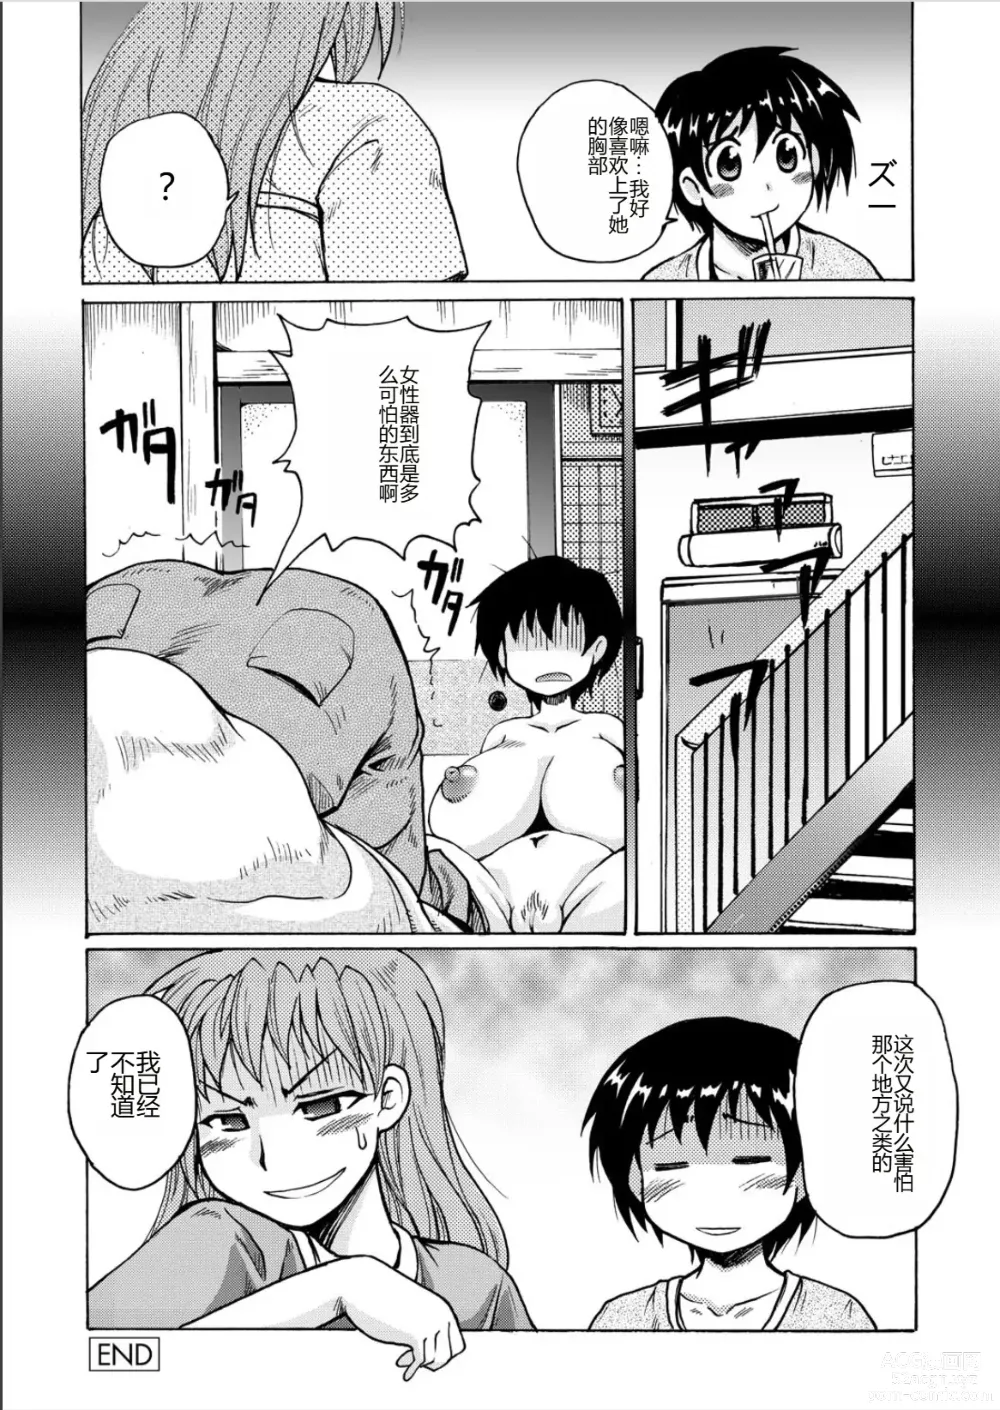 Page 174 of manga Lion Heart